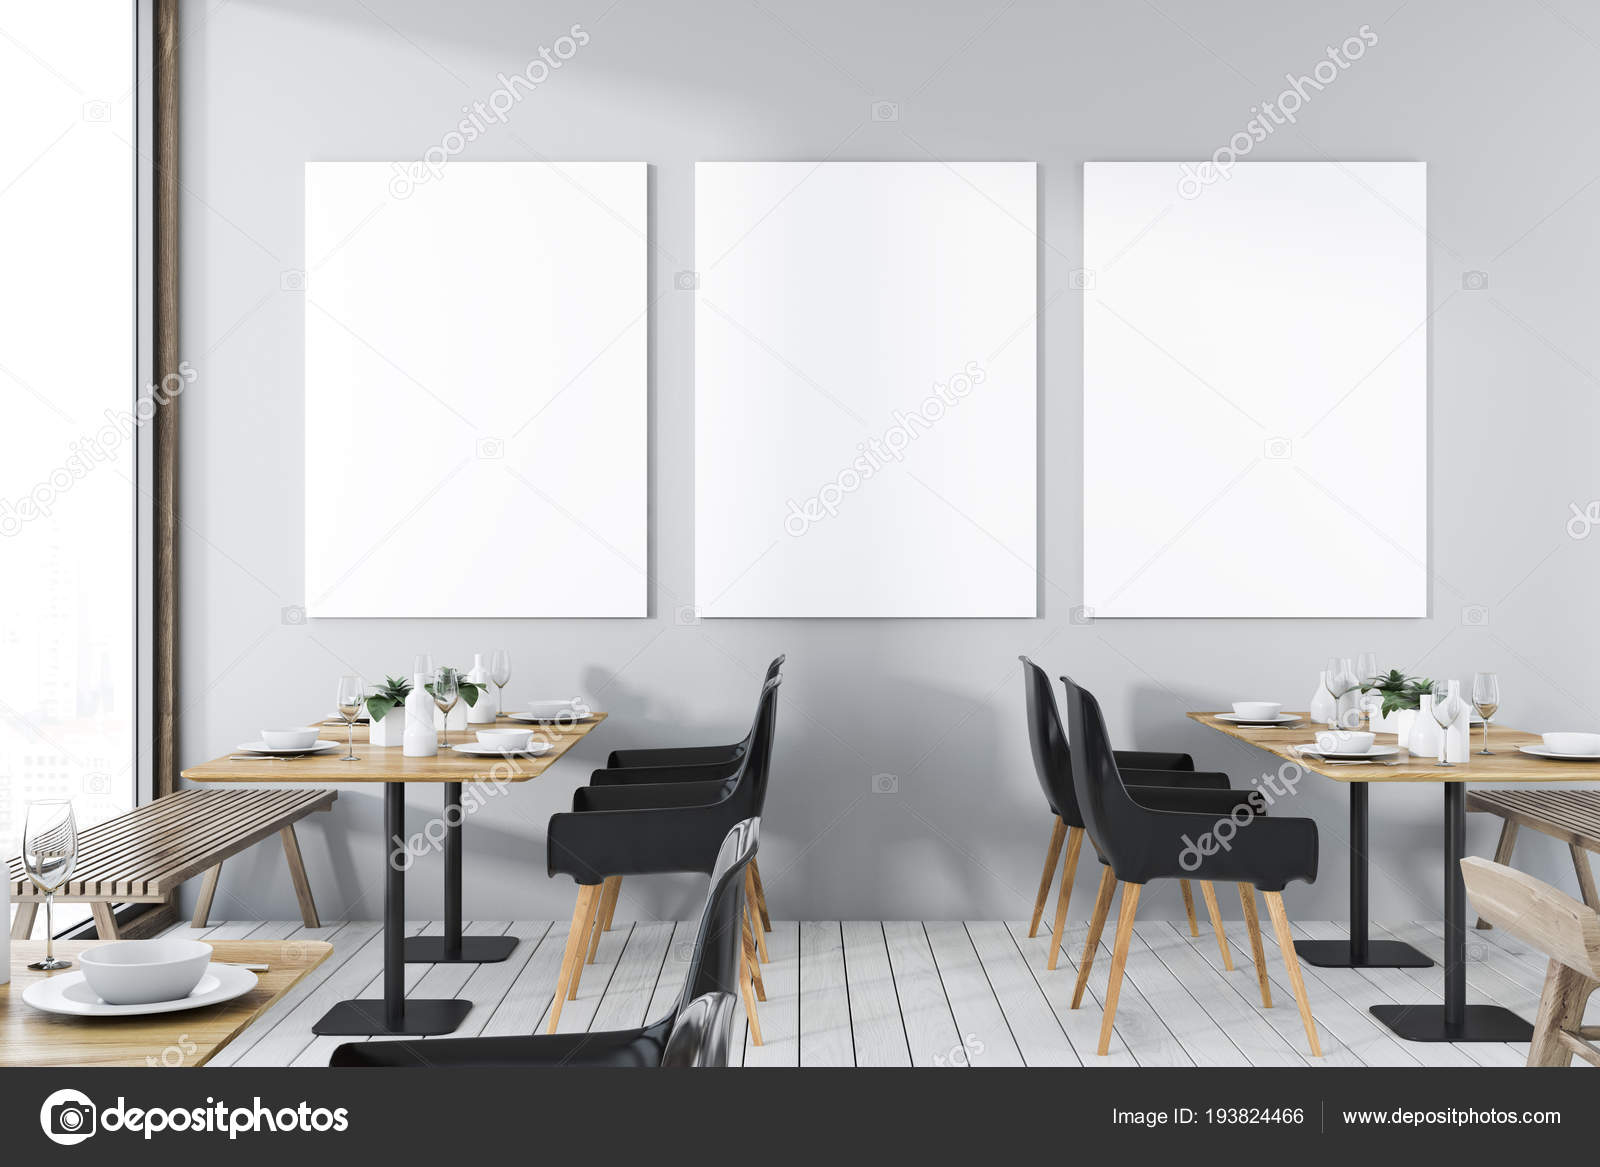 Blank Poster Gallery Wooden Floor Restaurant Gray Walls Set Tables